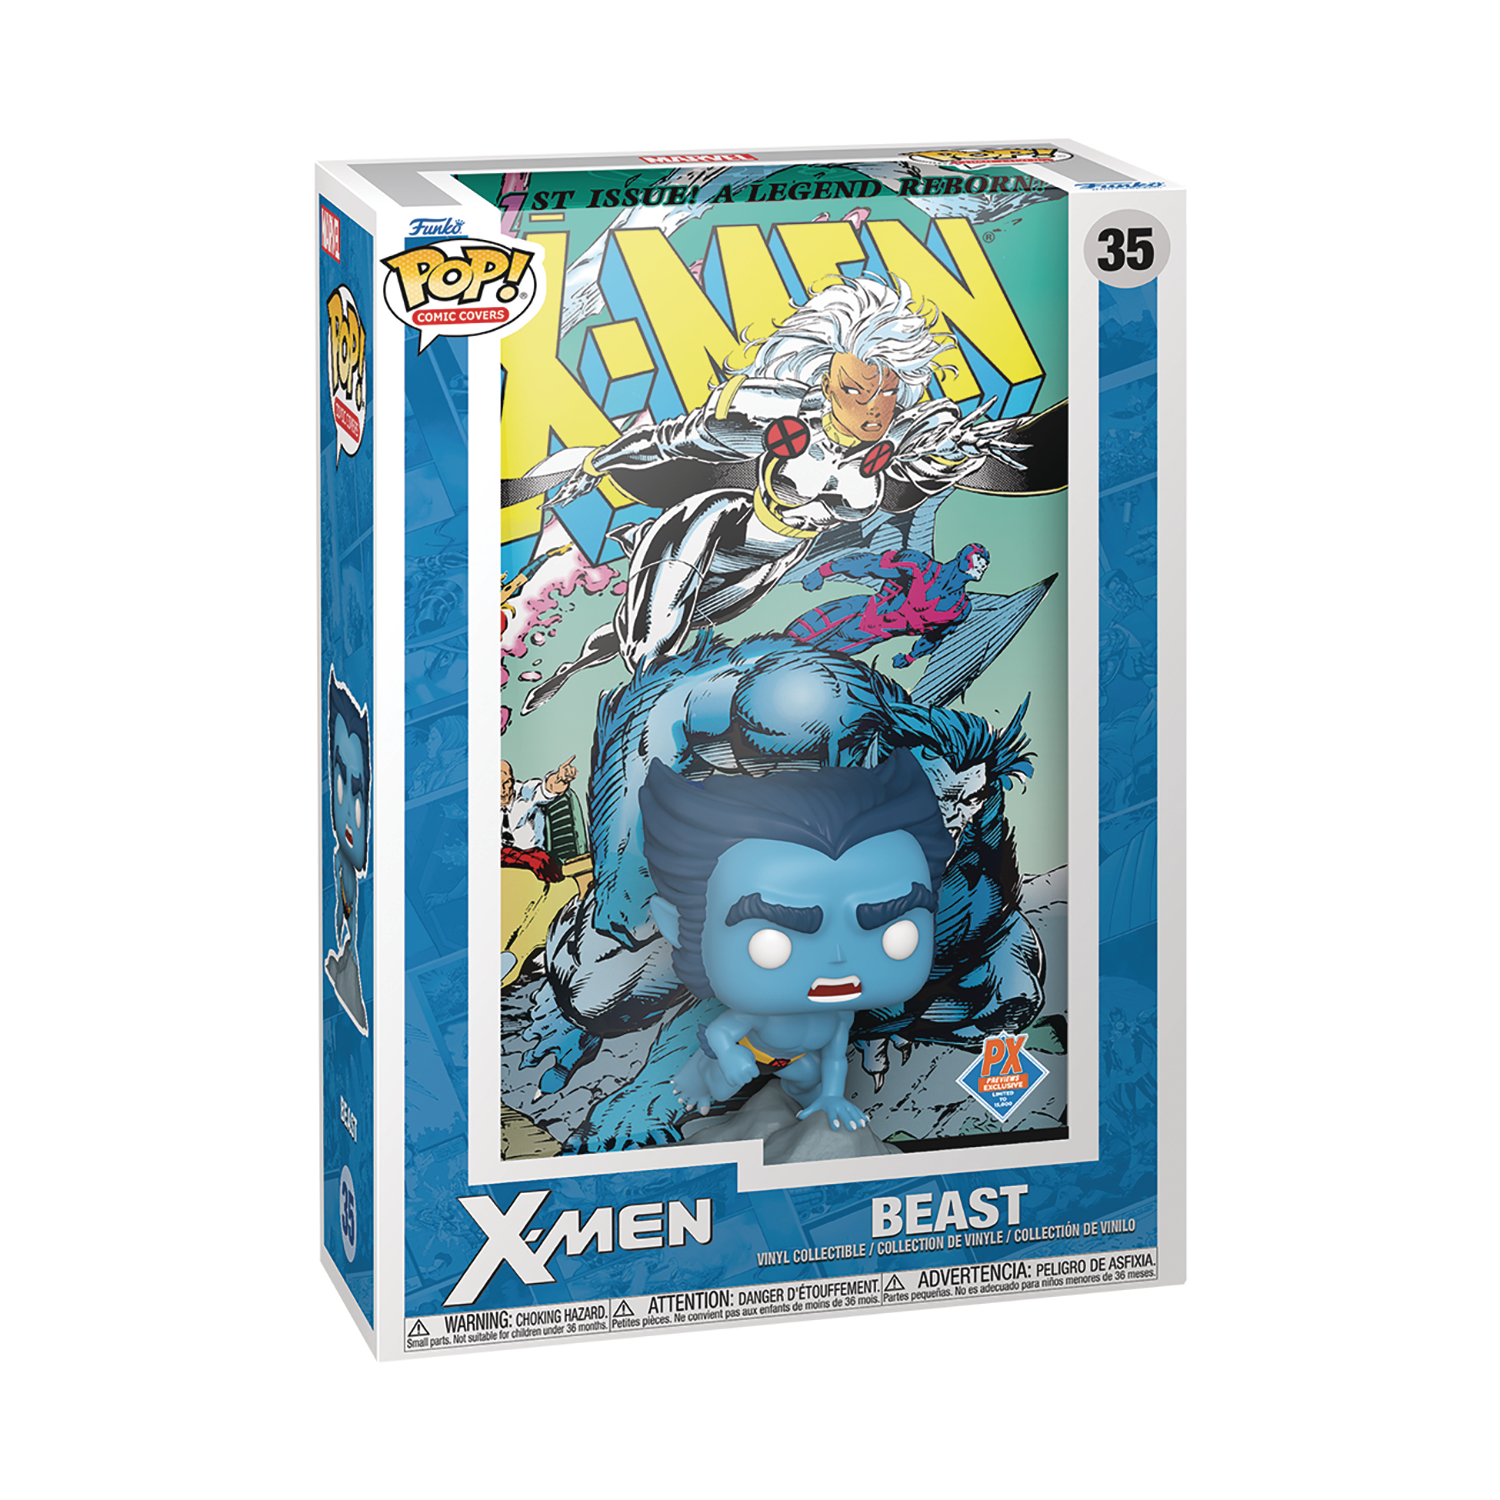 Pop Comic Cover Px Marvel X-Men #1 Beast Cover